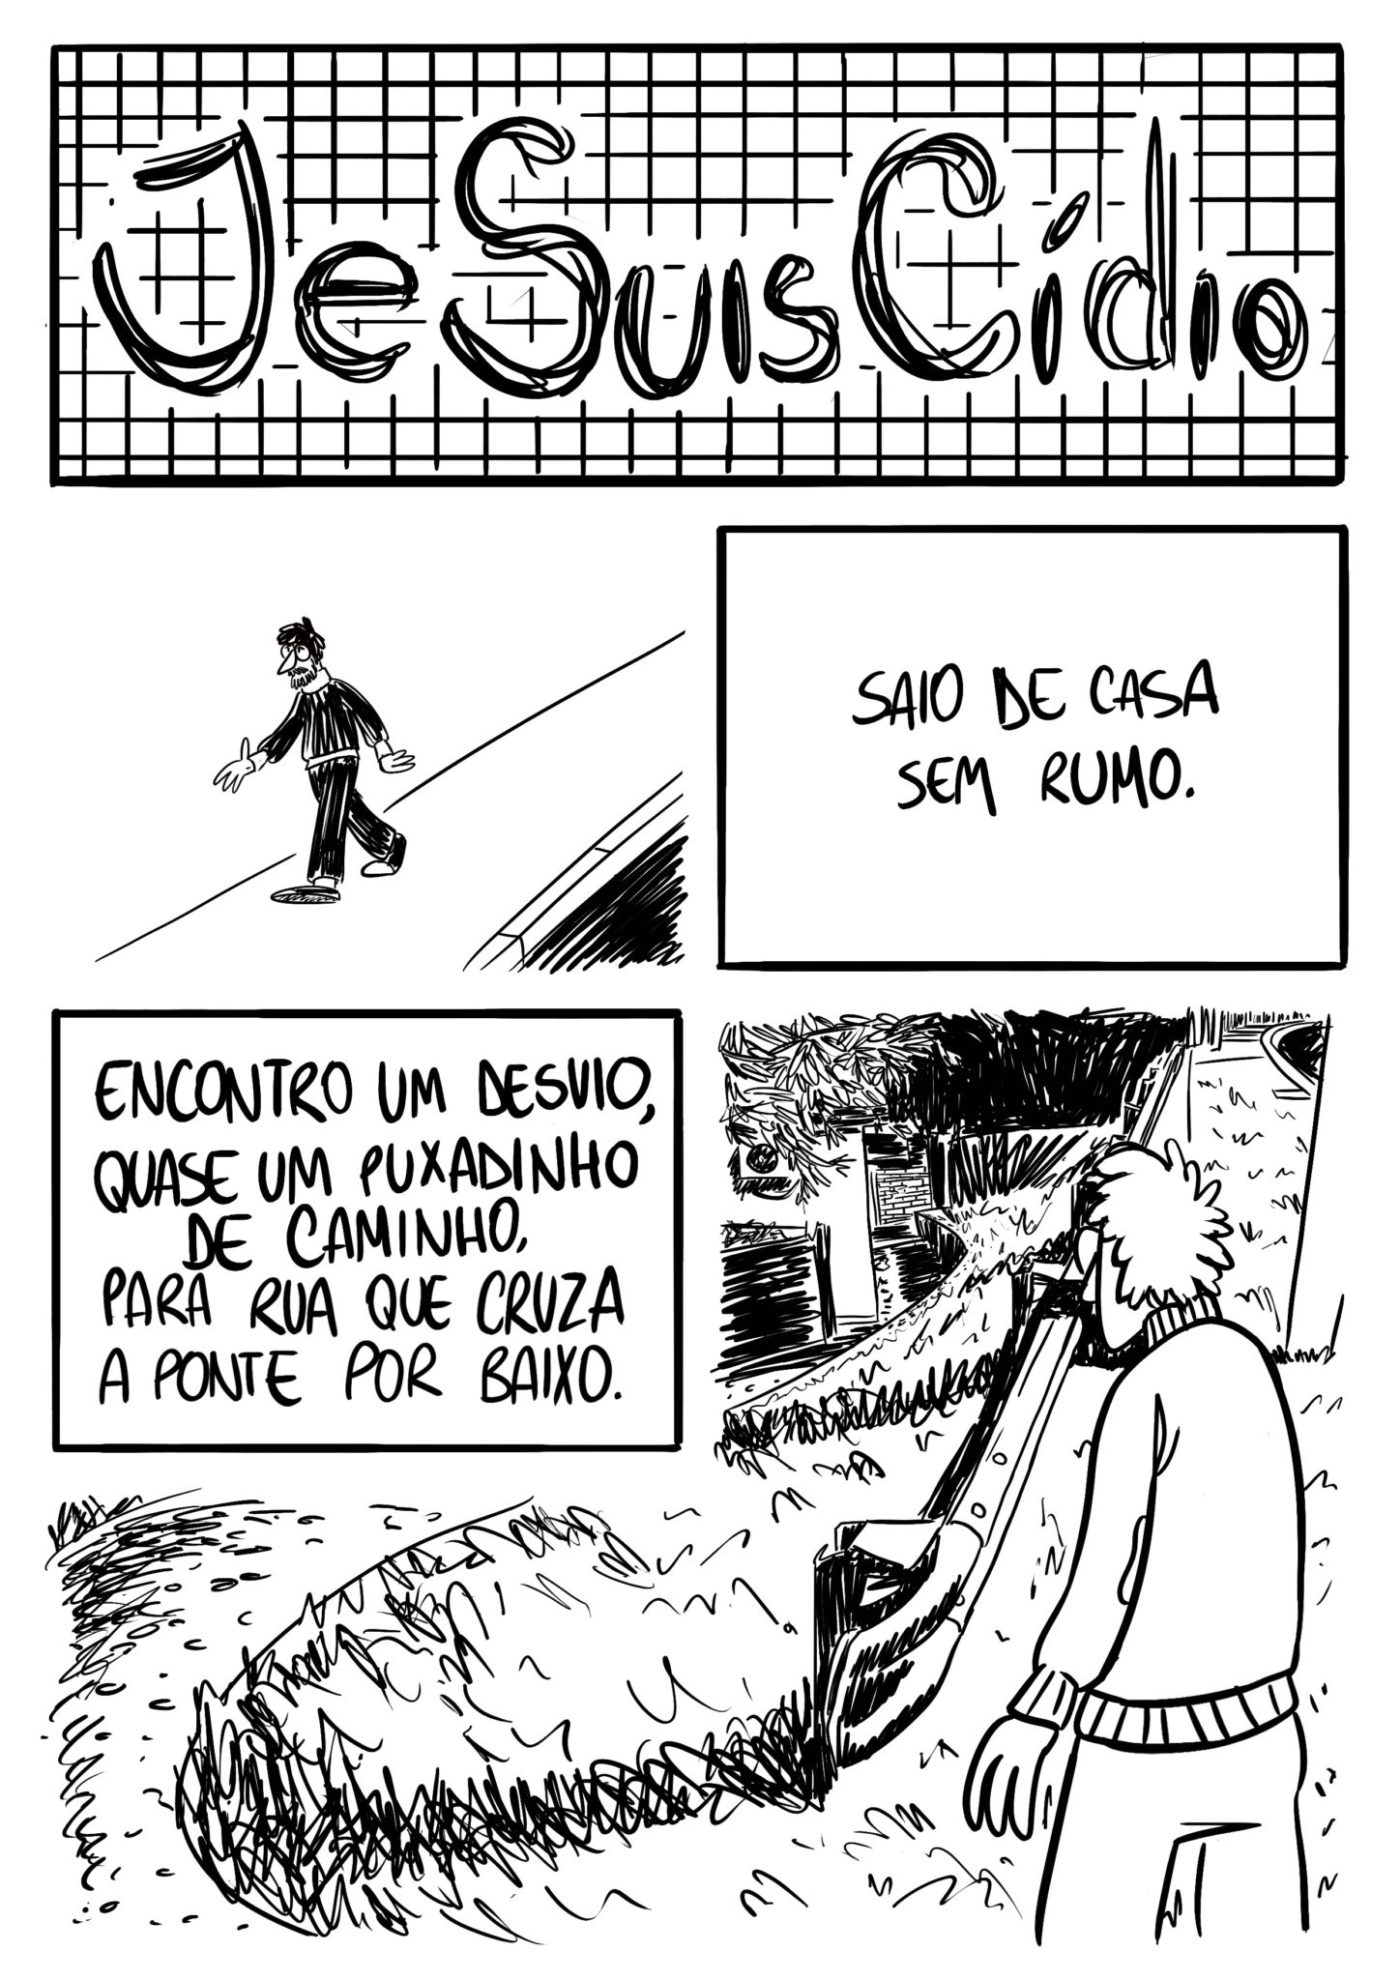 Je Suis Cídio #6, por João B. Godoi